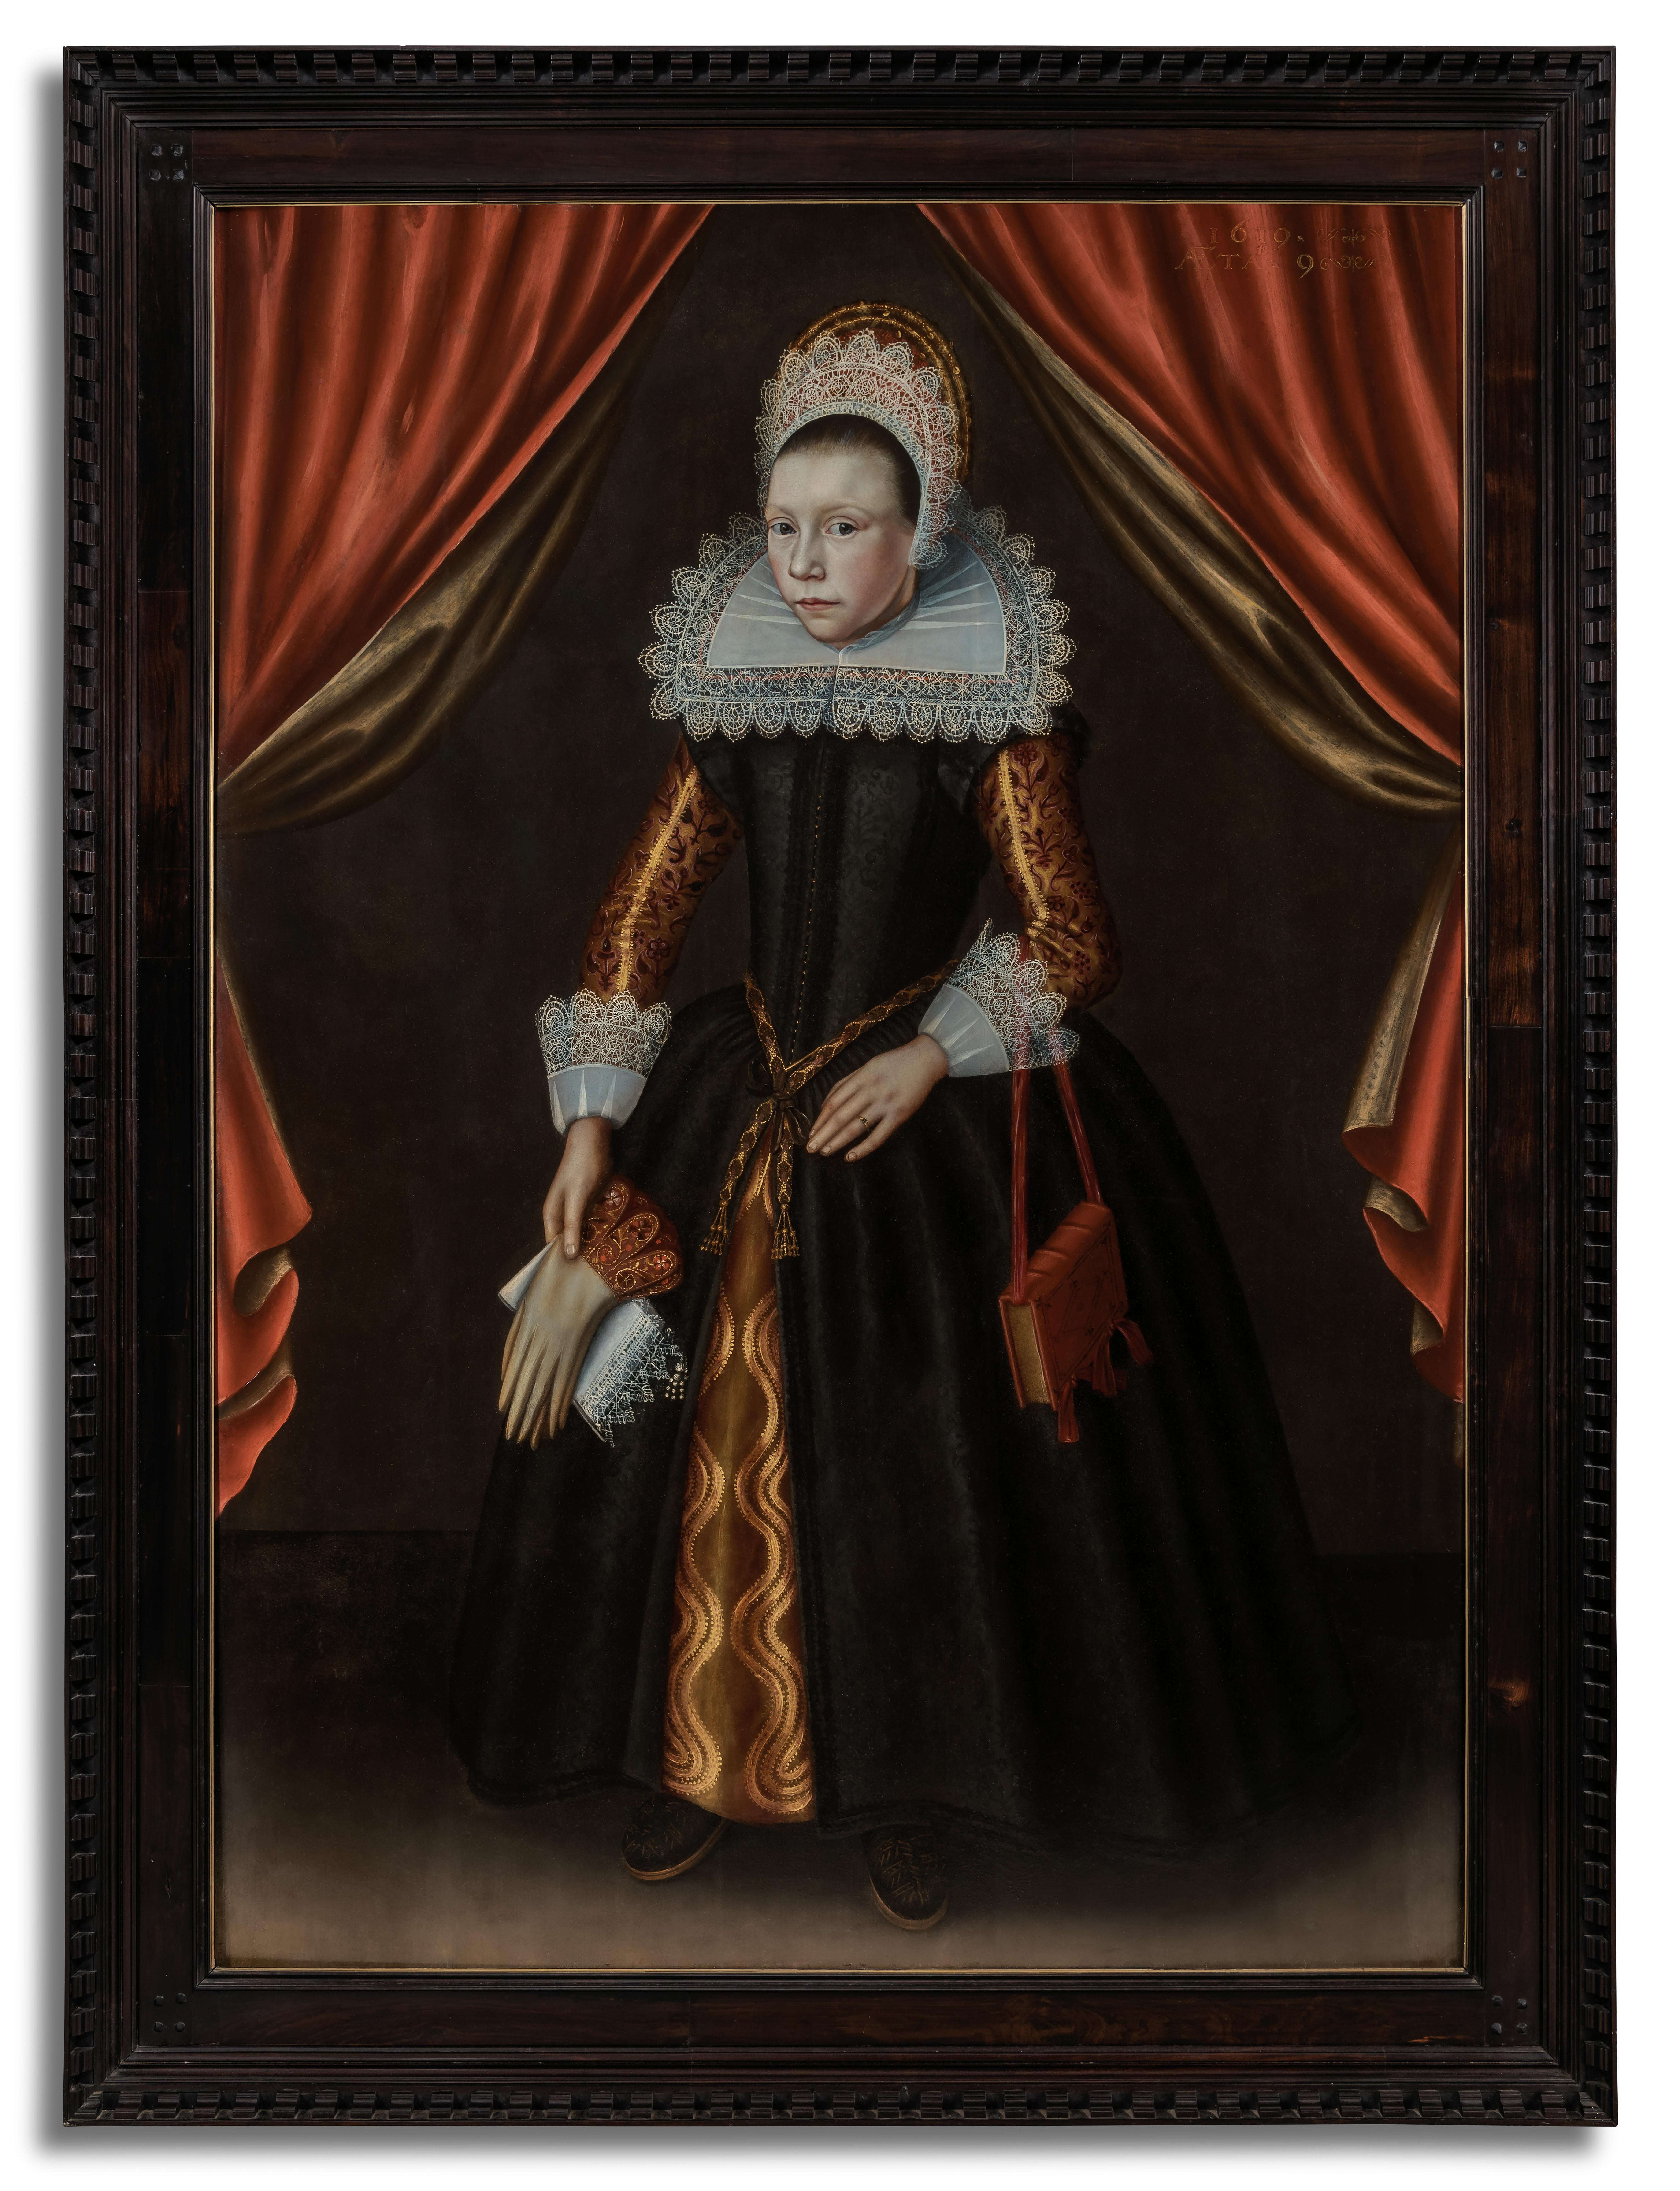 Cornelius van der Voort Portrait Painting - Dutch Old Master Portrait of Girl aged 9 in Black Dress & Lace Ruff dated 1619